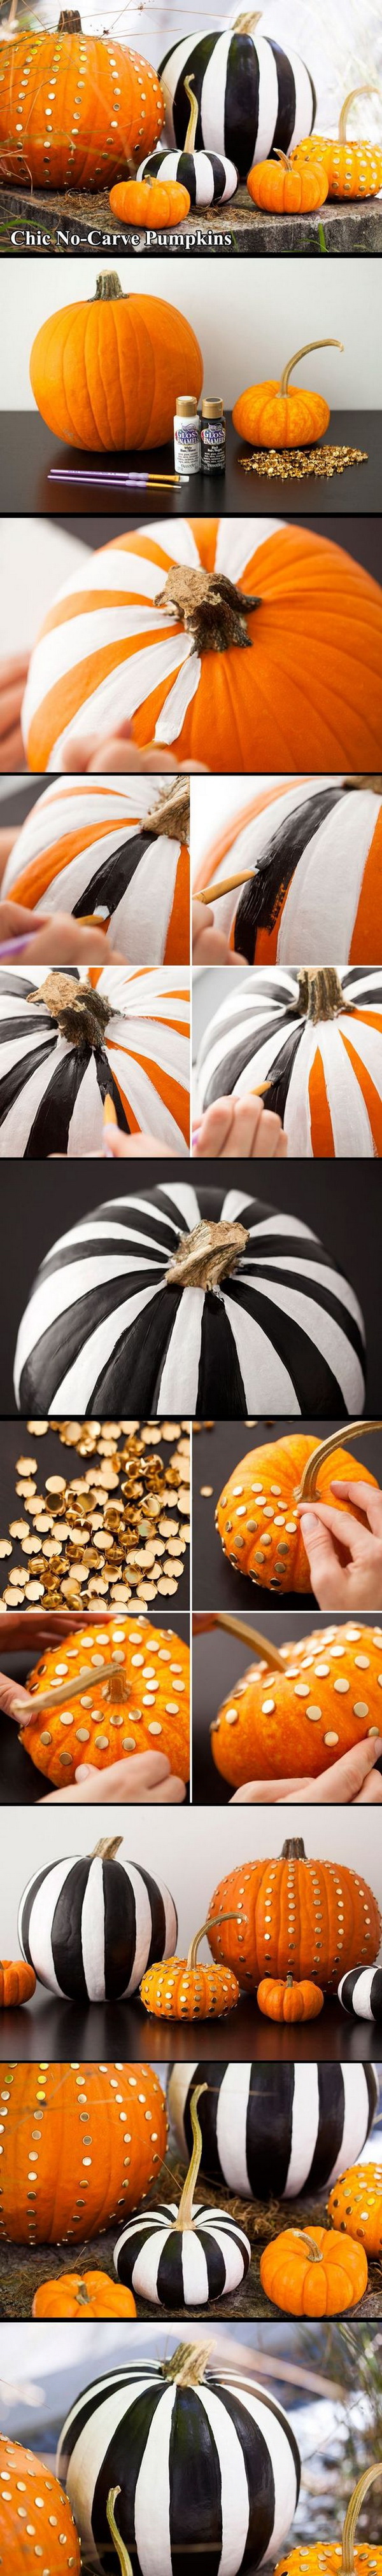 Black & White Striped Pumpkins. 